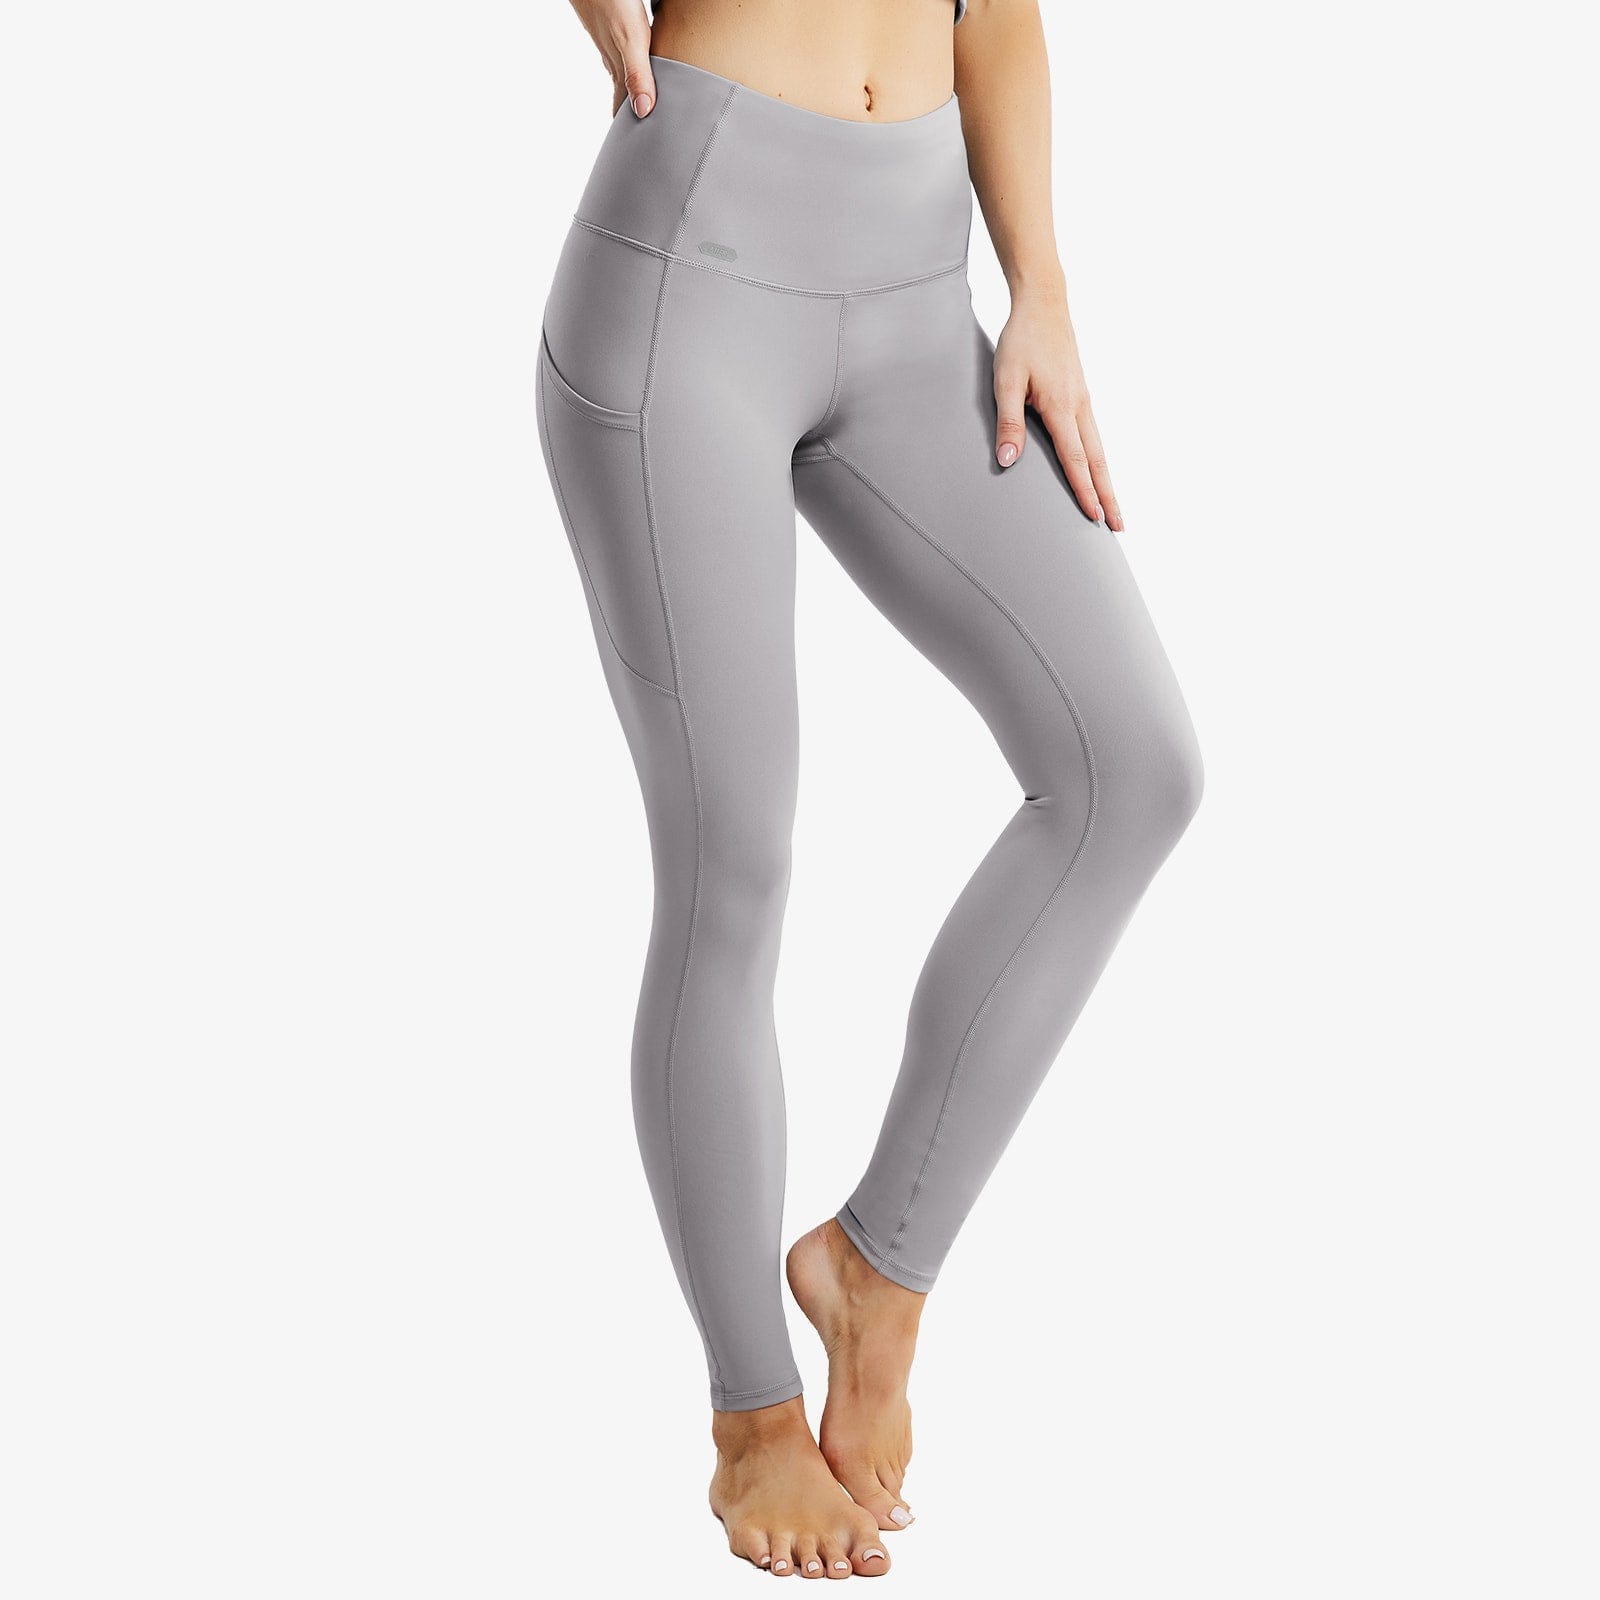 Wool Wrinkle Yoga Pants with Pocket for Women High Waist Leggings